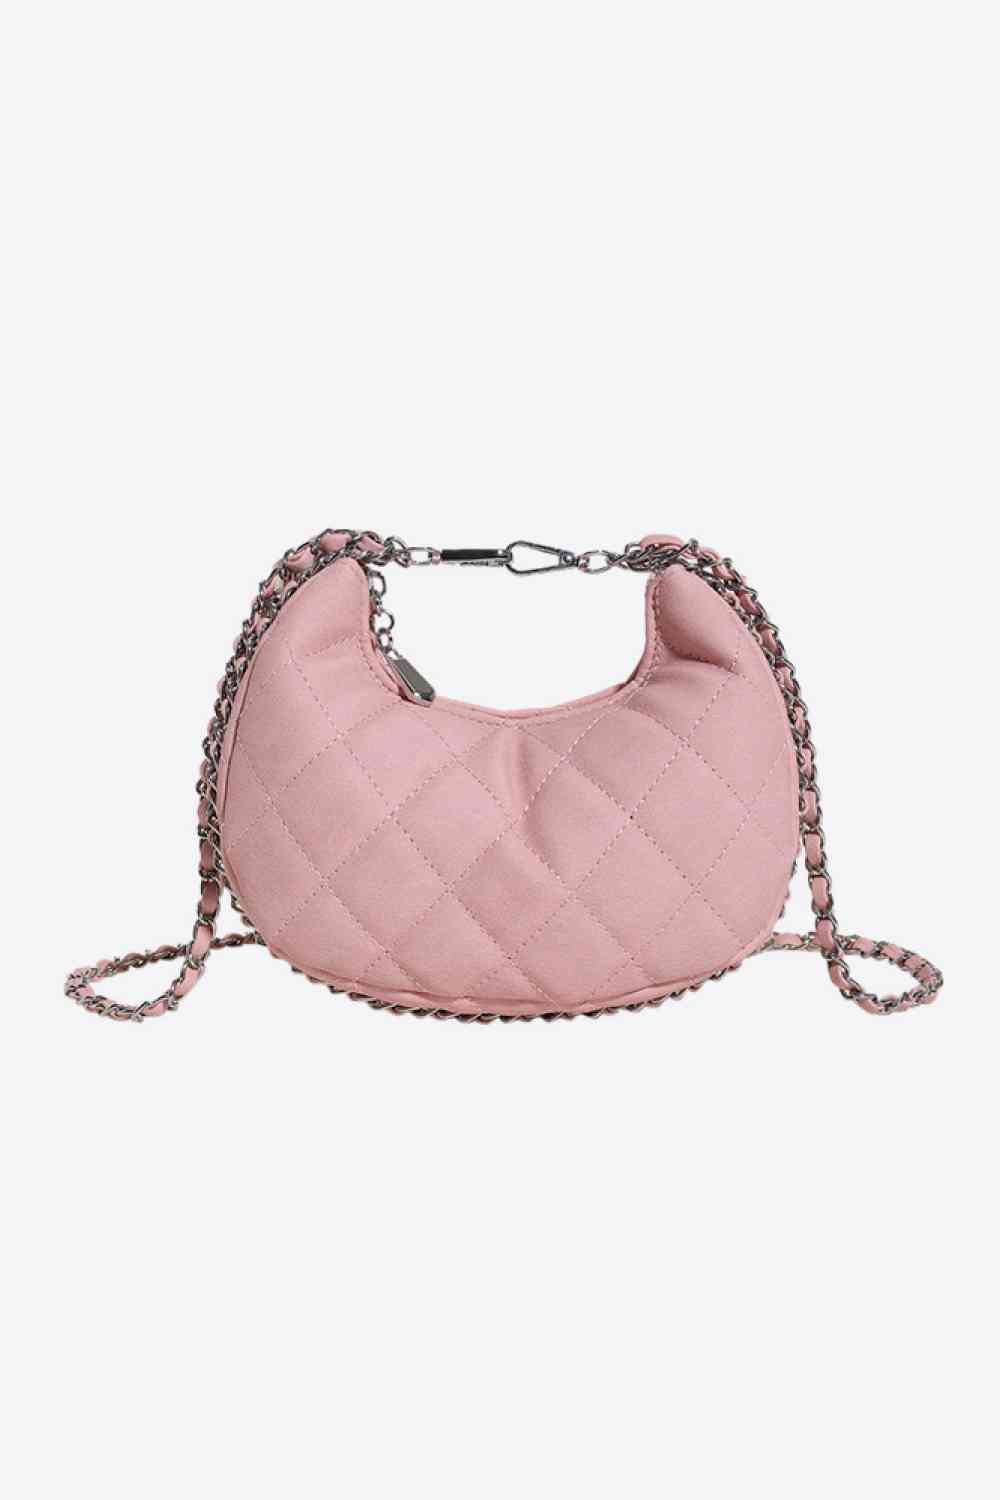 PU Leather Handbag - Carnation Pink / One Size - Women Bags & Wallets - Handbags - 1 - 2024